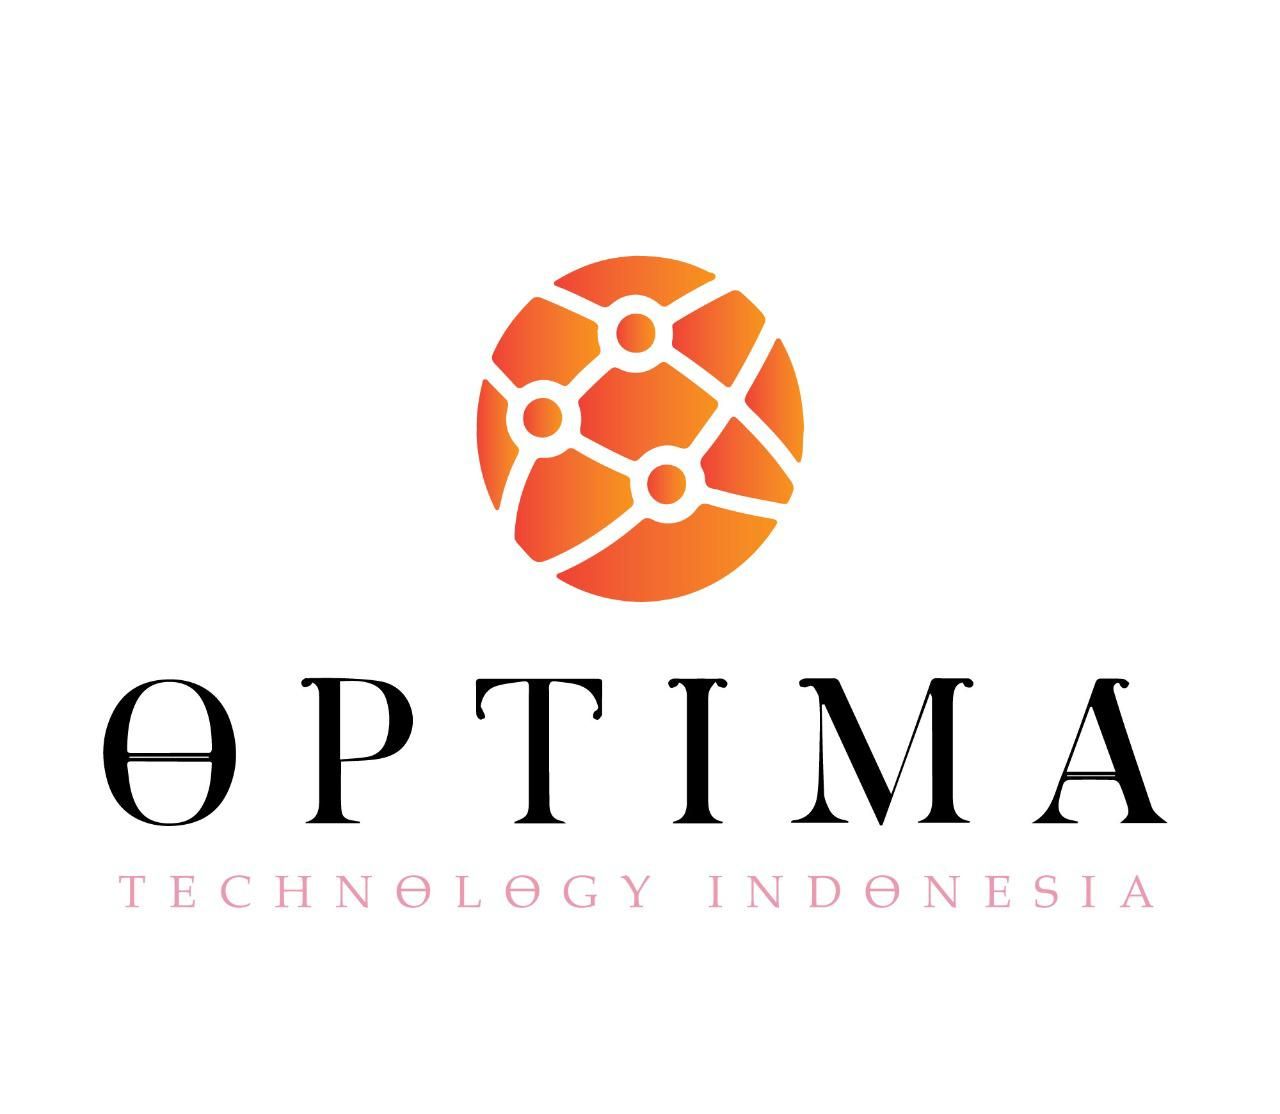 PT Optima Technology Indonesia